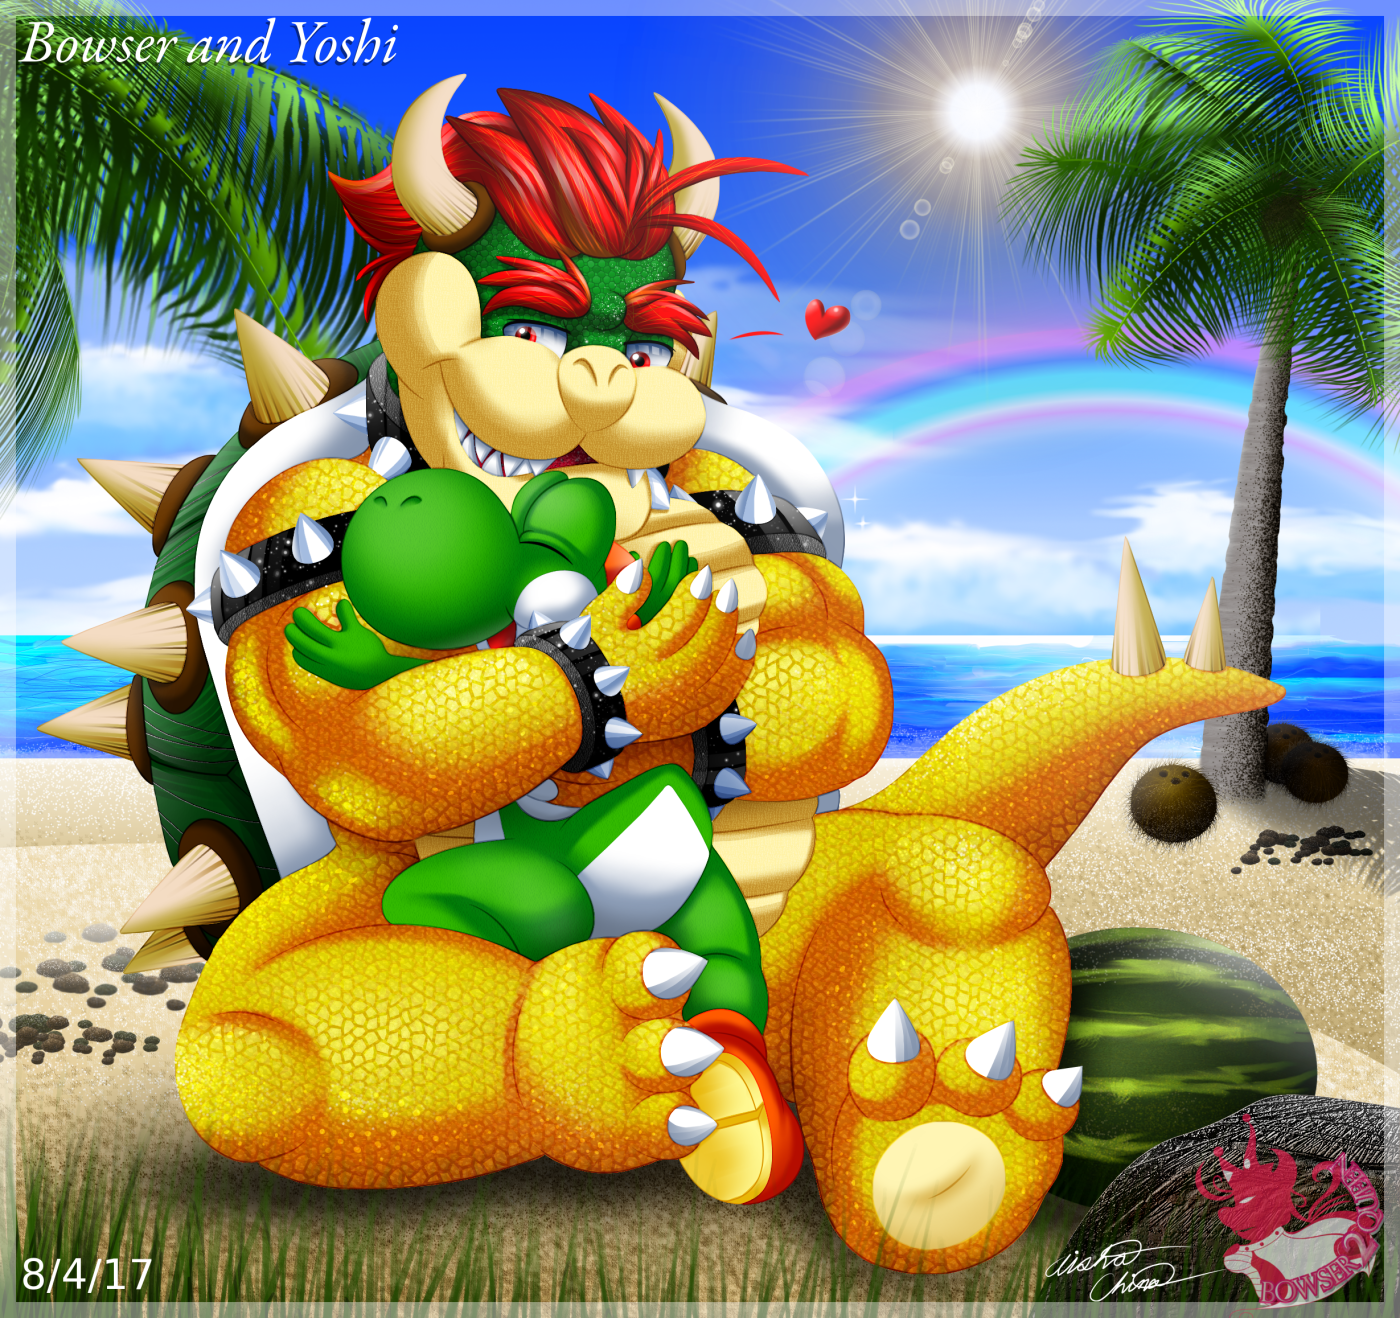 Bowser Yoshi huggles on the Beach